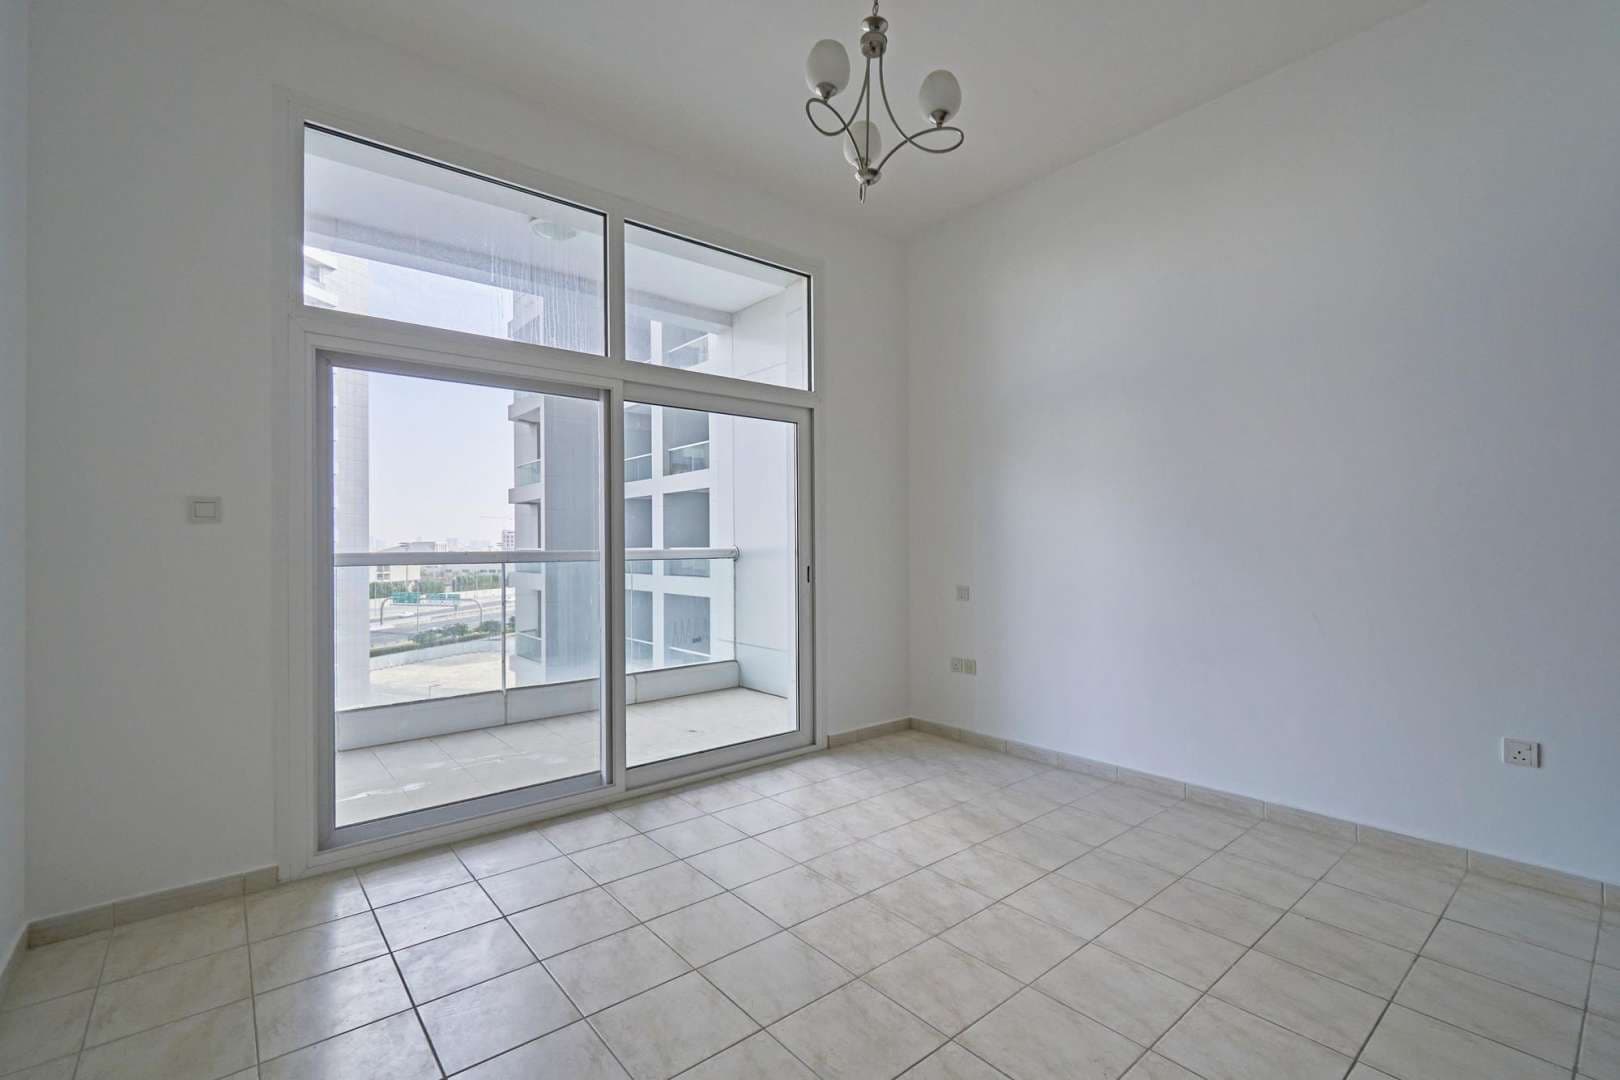 2 Bedroom Apartment For Sale Al Fahad Tower 2 Lp05453 1aff184fd9bc9500.jpg